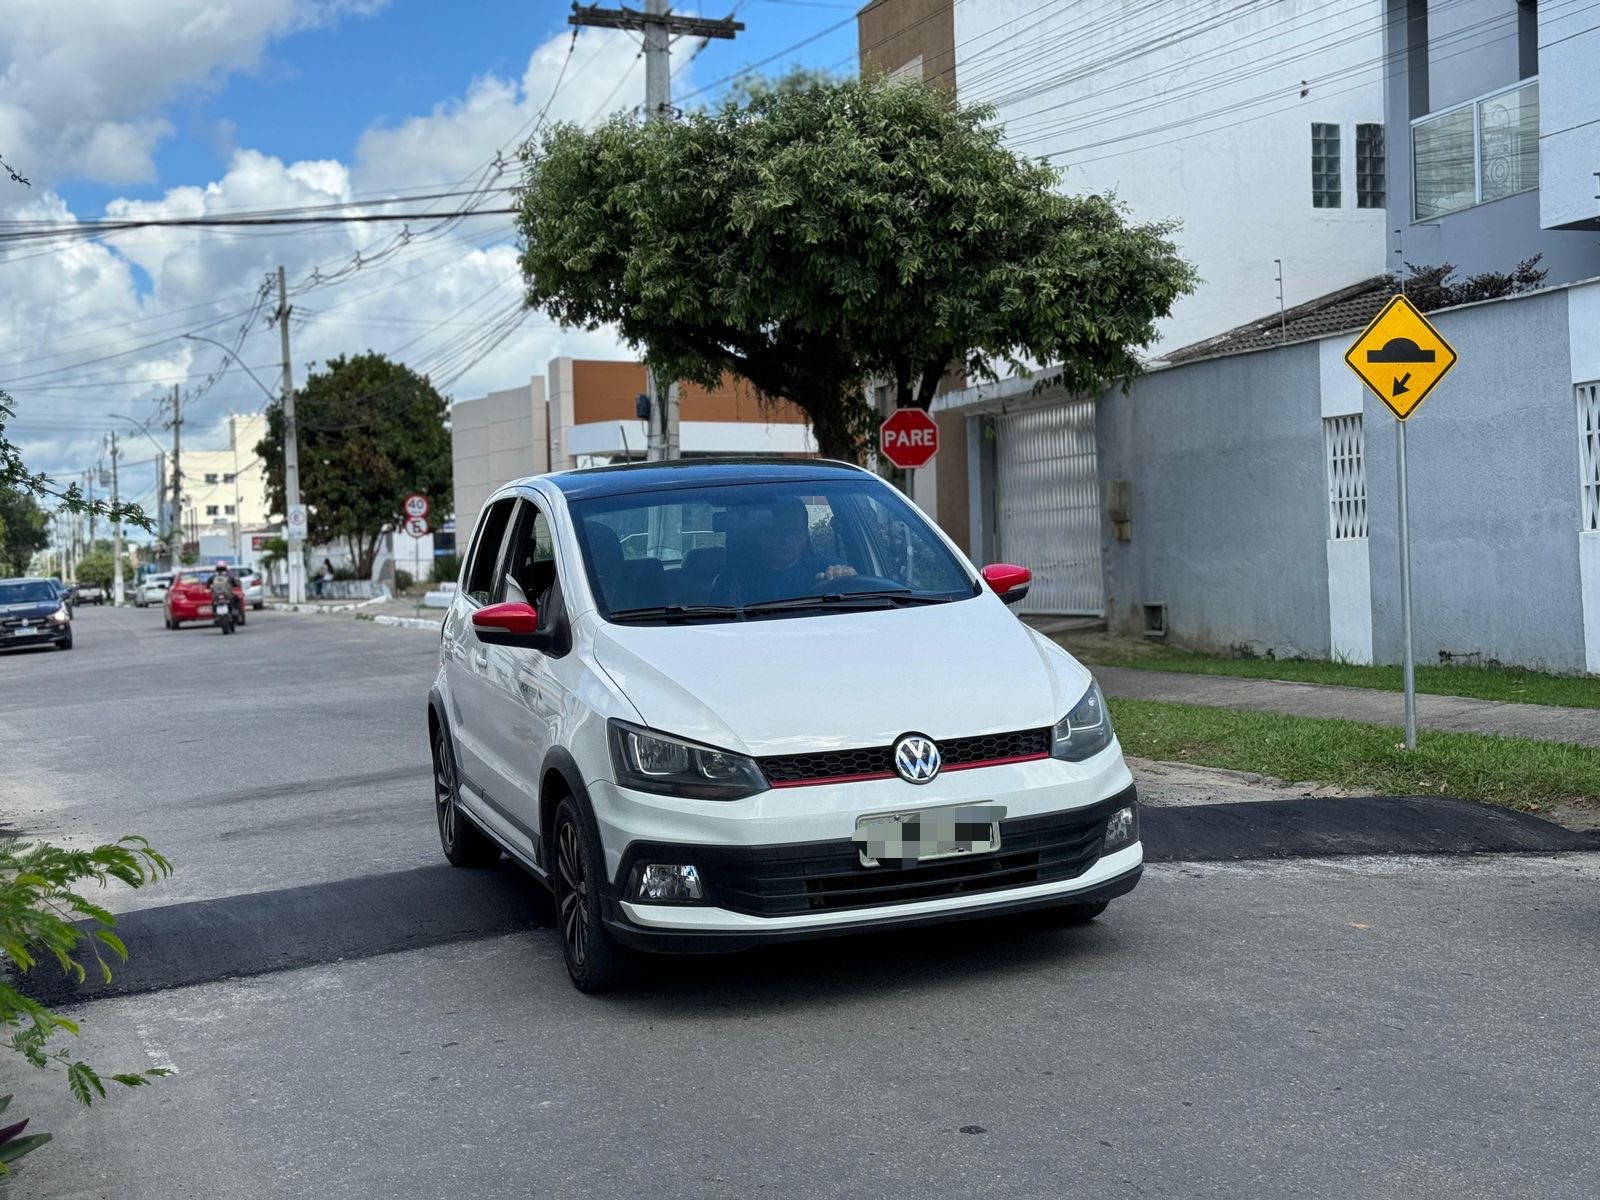 Prefeitura de Eunpolis alerta motoristas sobre novo quebra-molas na Rua Padre Joo Gualberto - (Foto: Divulgao)